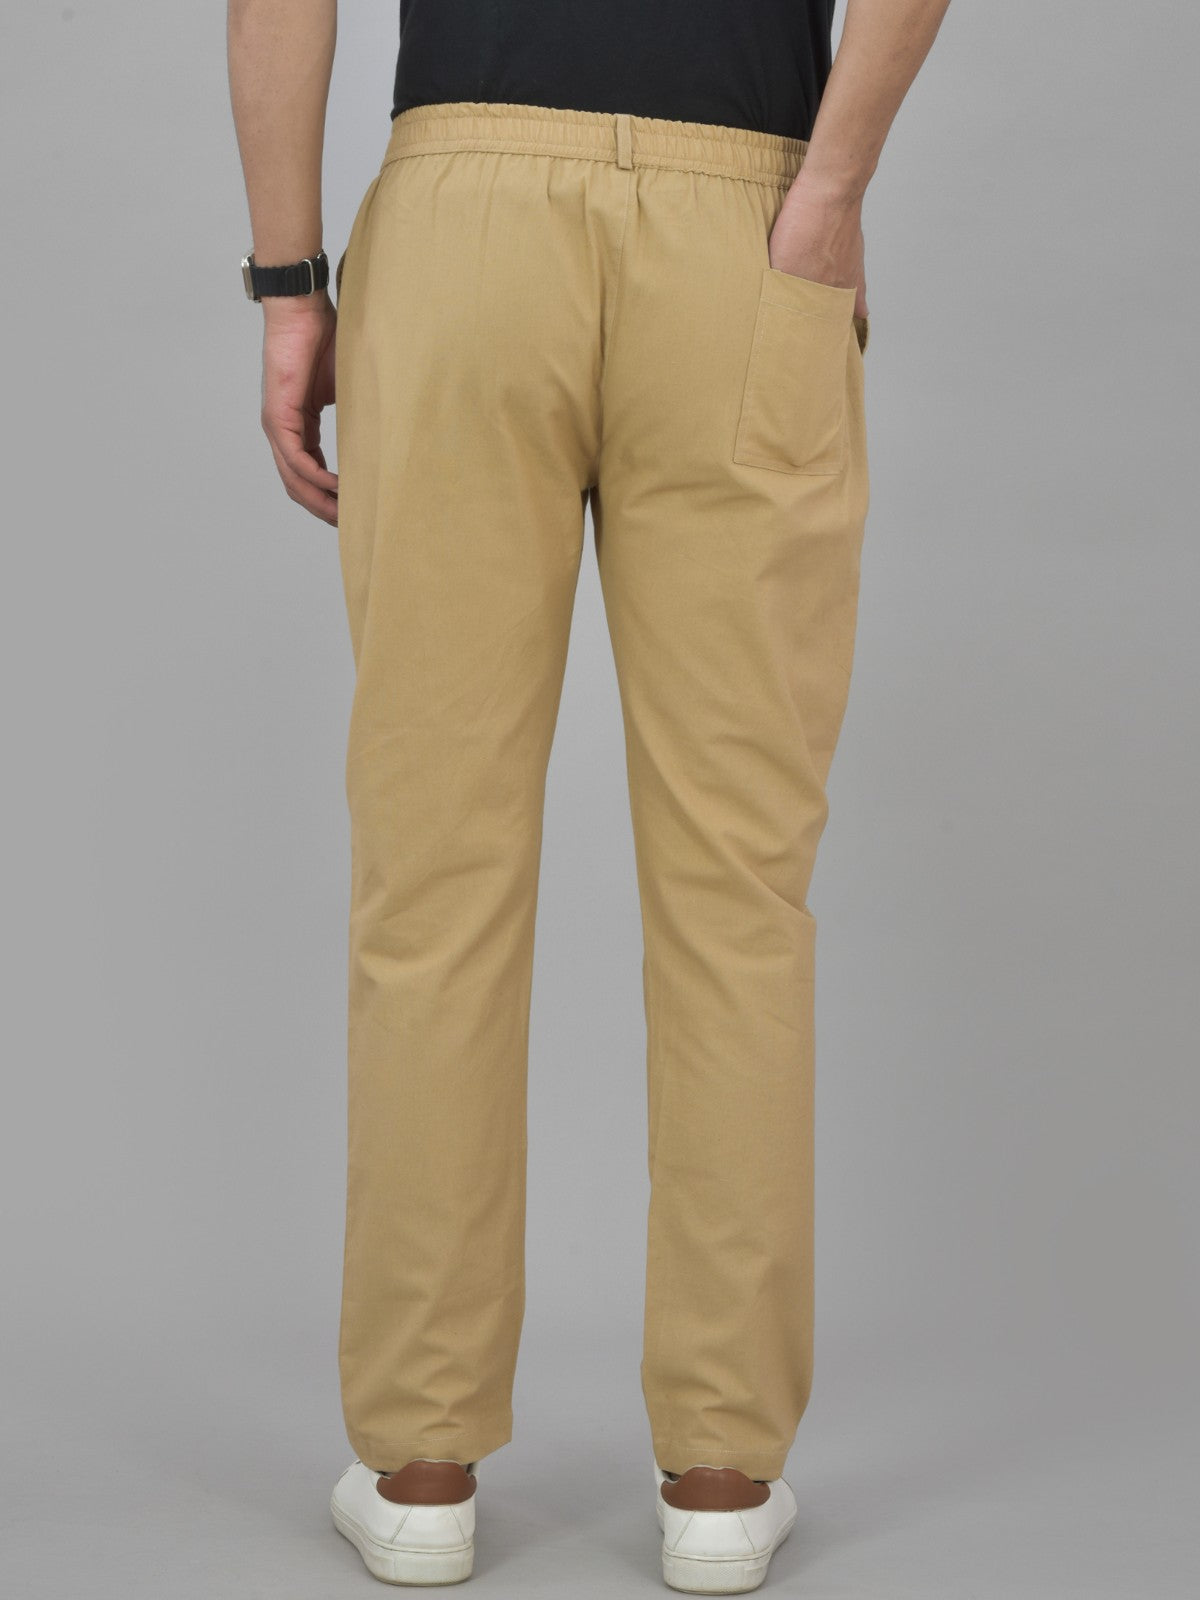 Beige Airy linen  Summer Cool Cotton Comfort Pants For Men